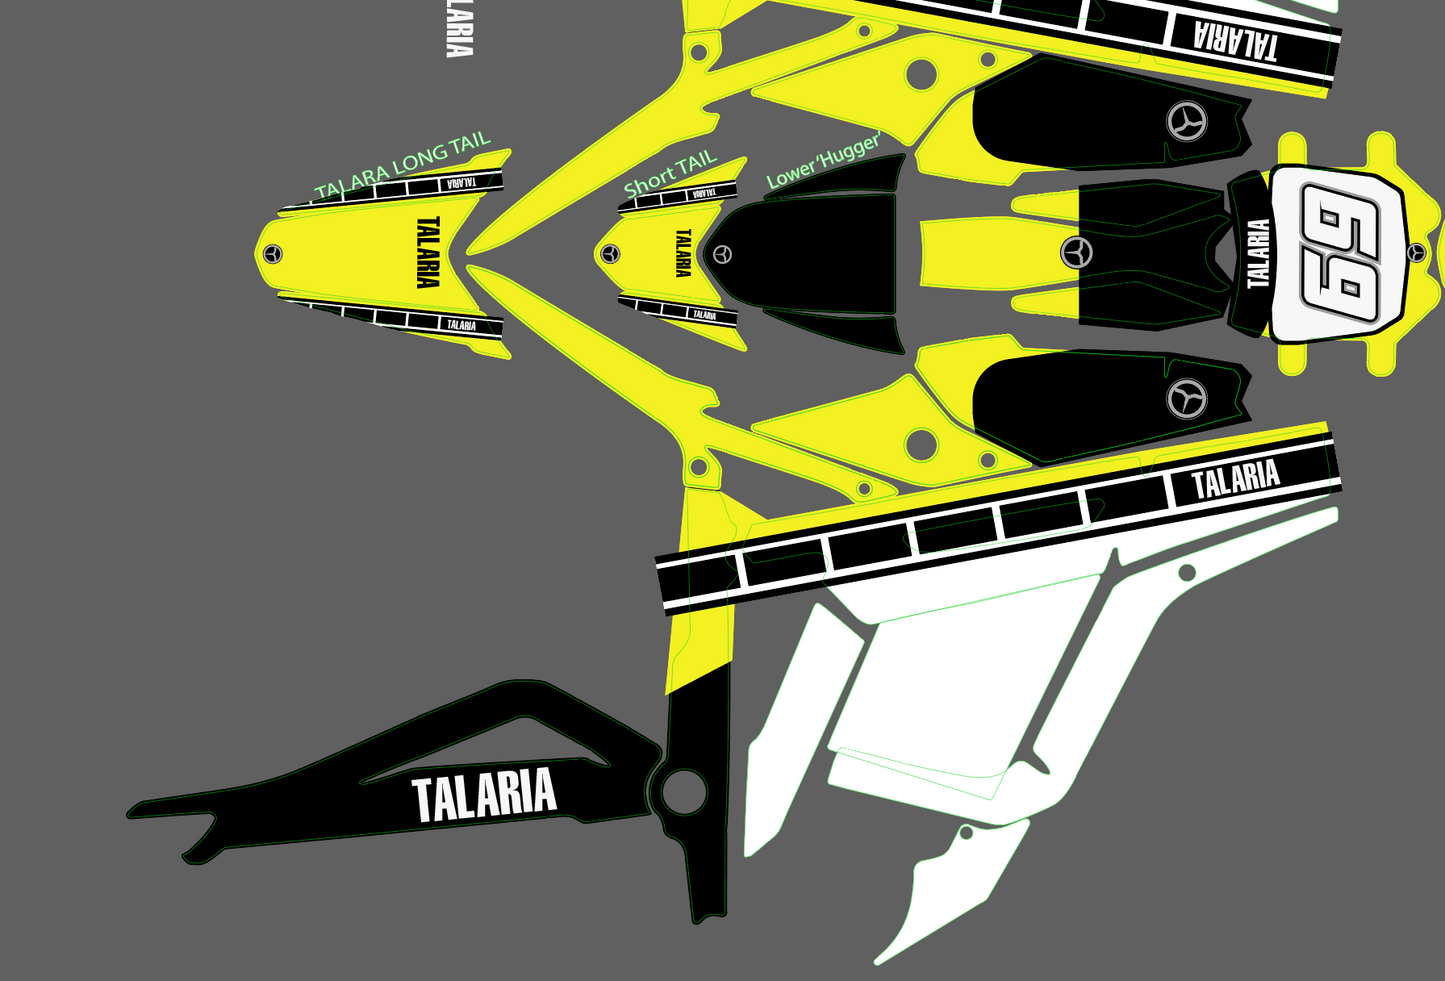 Classic yamaha 60th anniversary  Yellow & Black for Talaria MX3 / Talaria R Mx4 / Decal set - REVRides